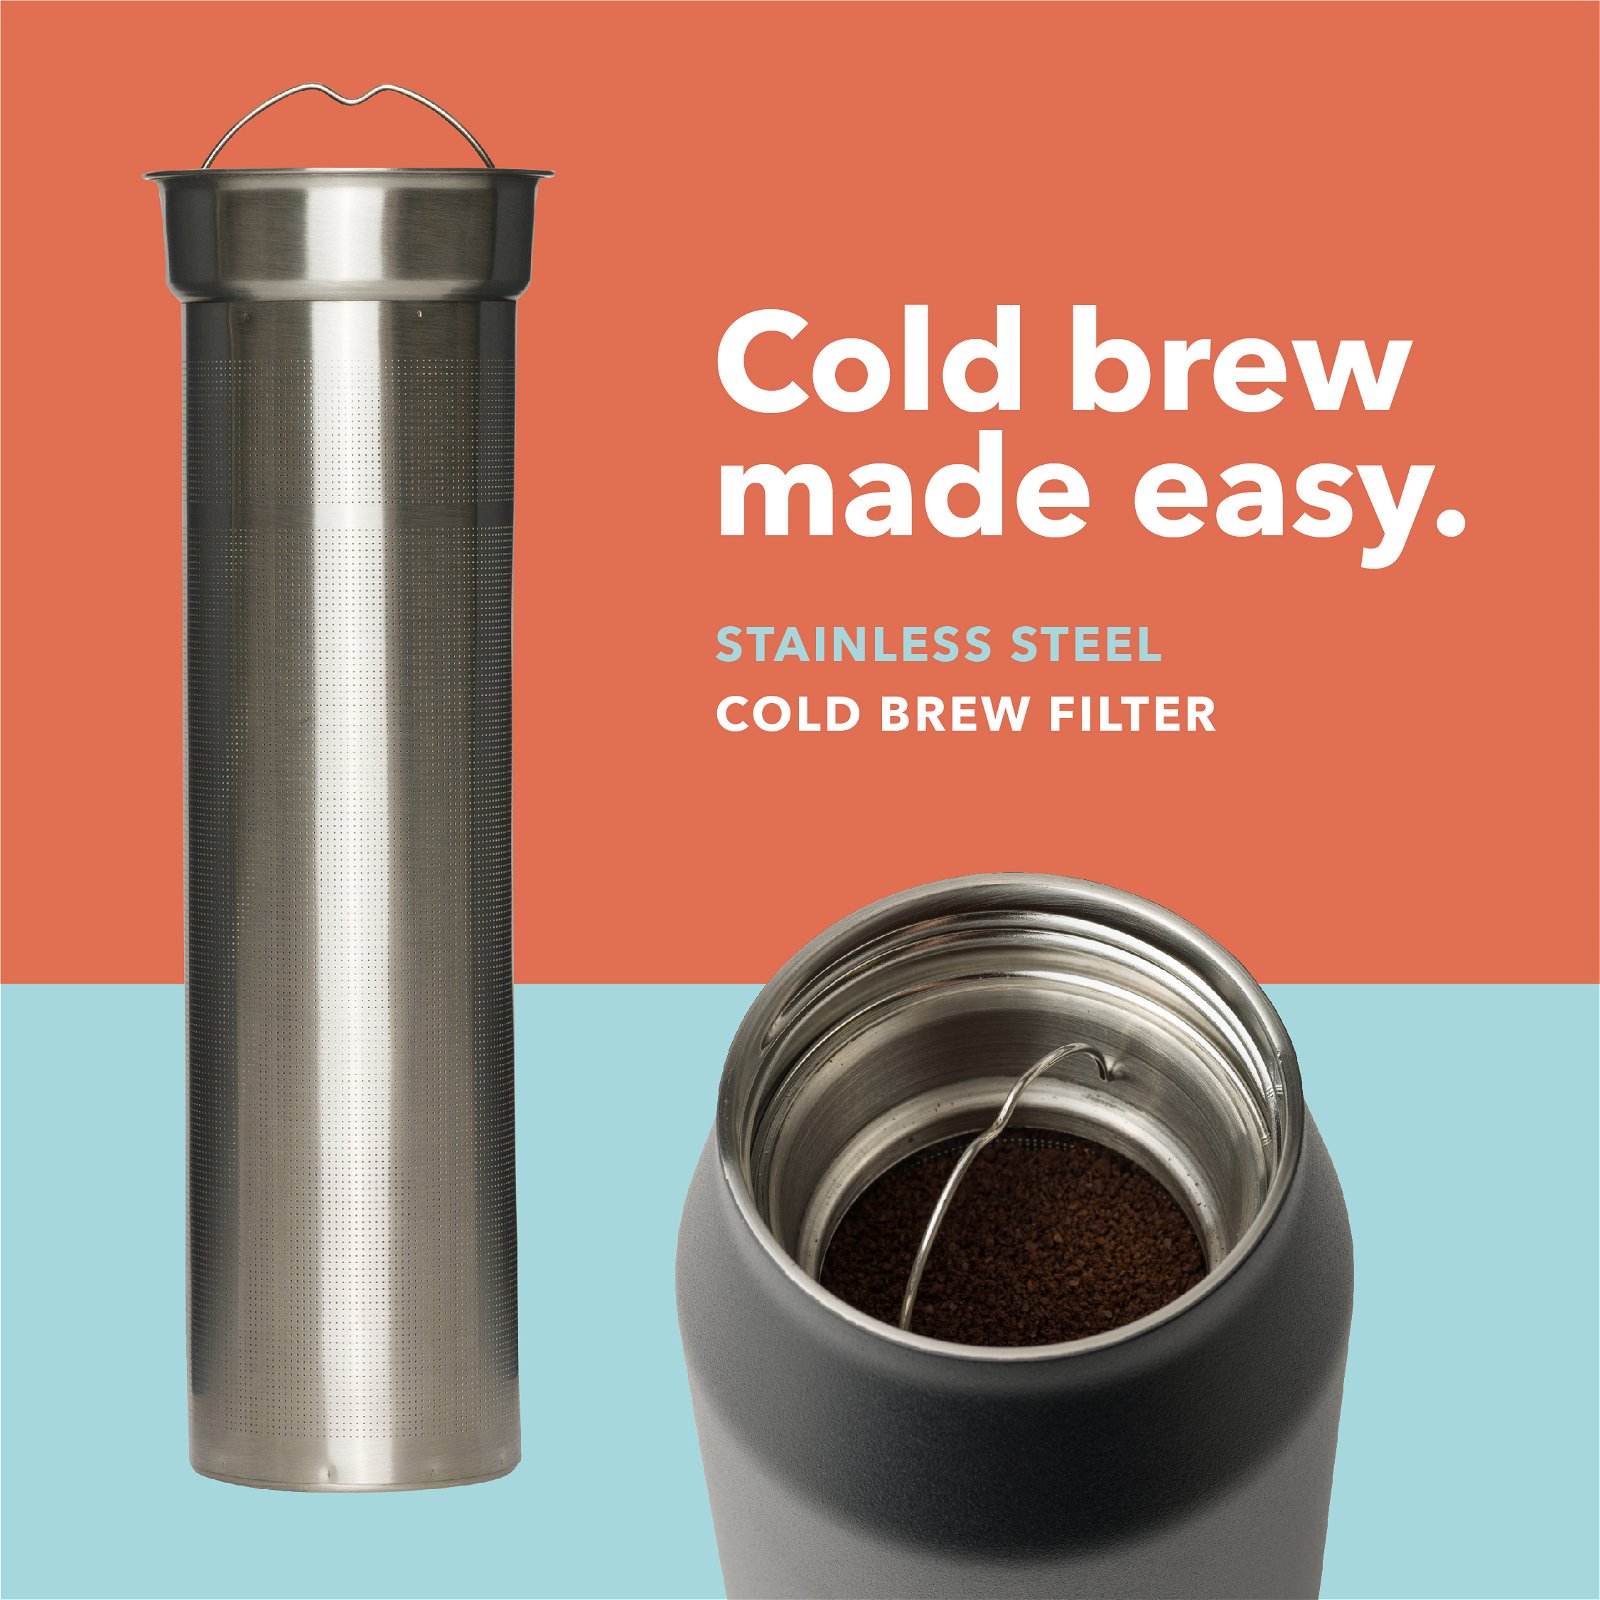 MiiR: Introducing the Cold Brew Filter